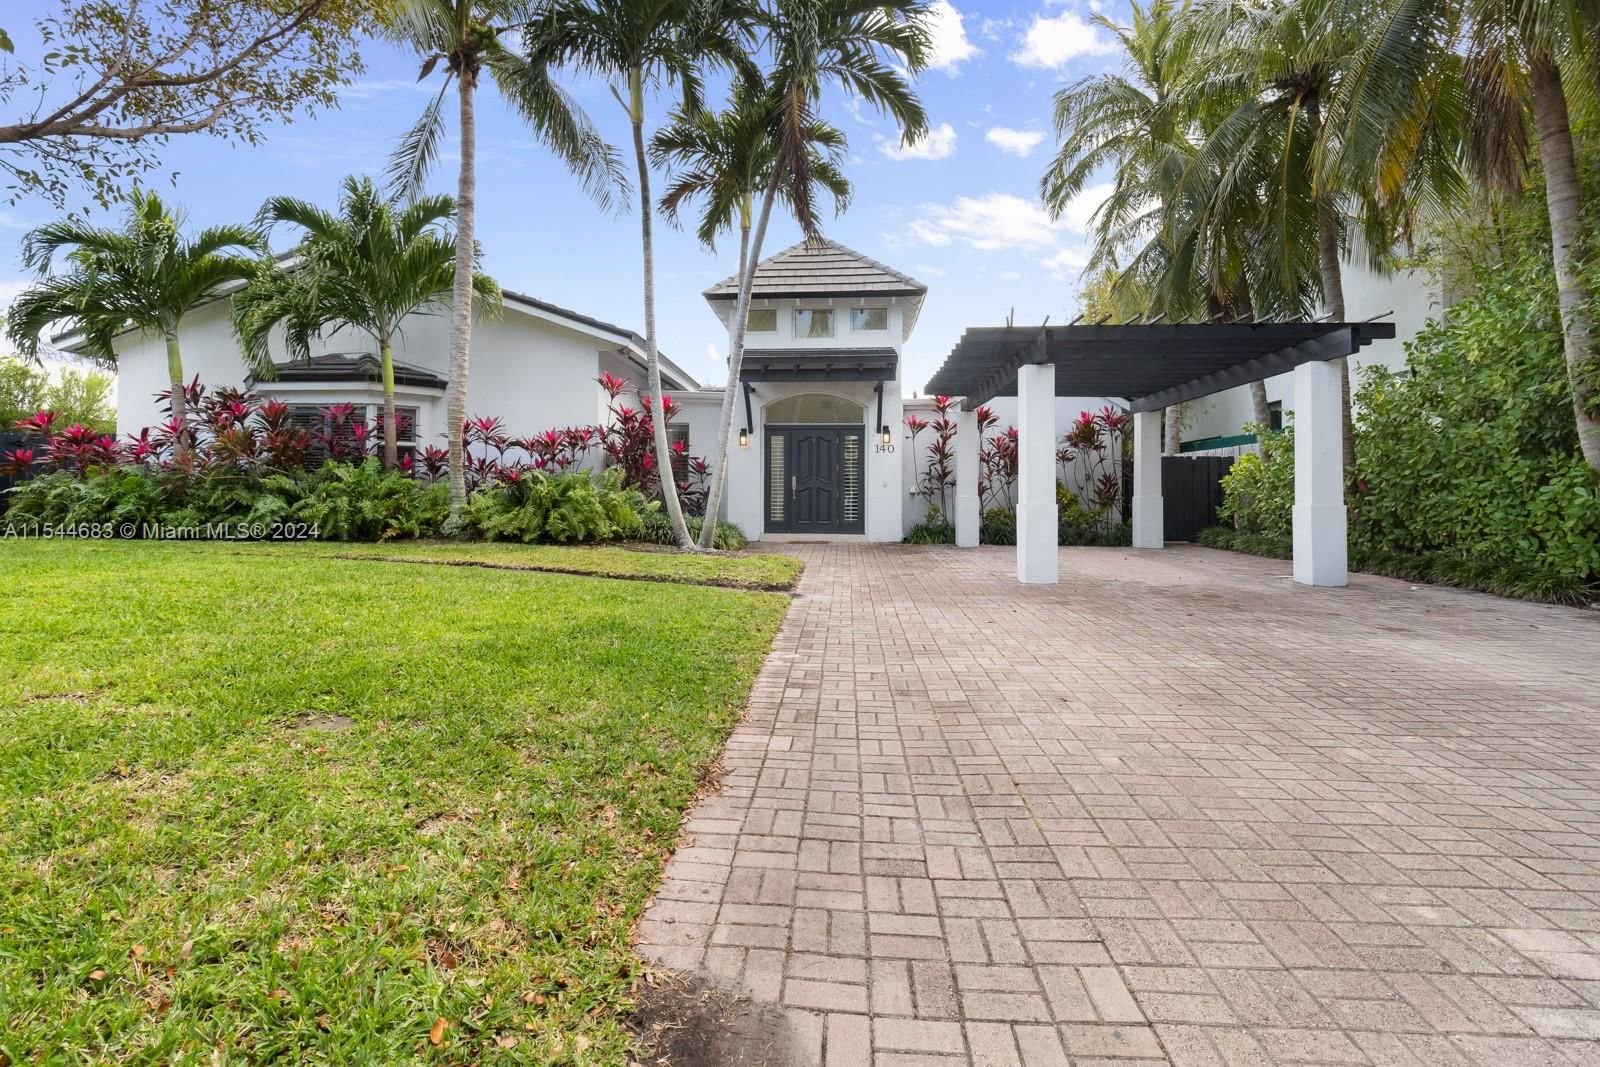 Real estate property located at 140 Mashta Dr, Miami-Dade County, BISCAYNE KEY ESTATES, Key Biscayne, FL